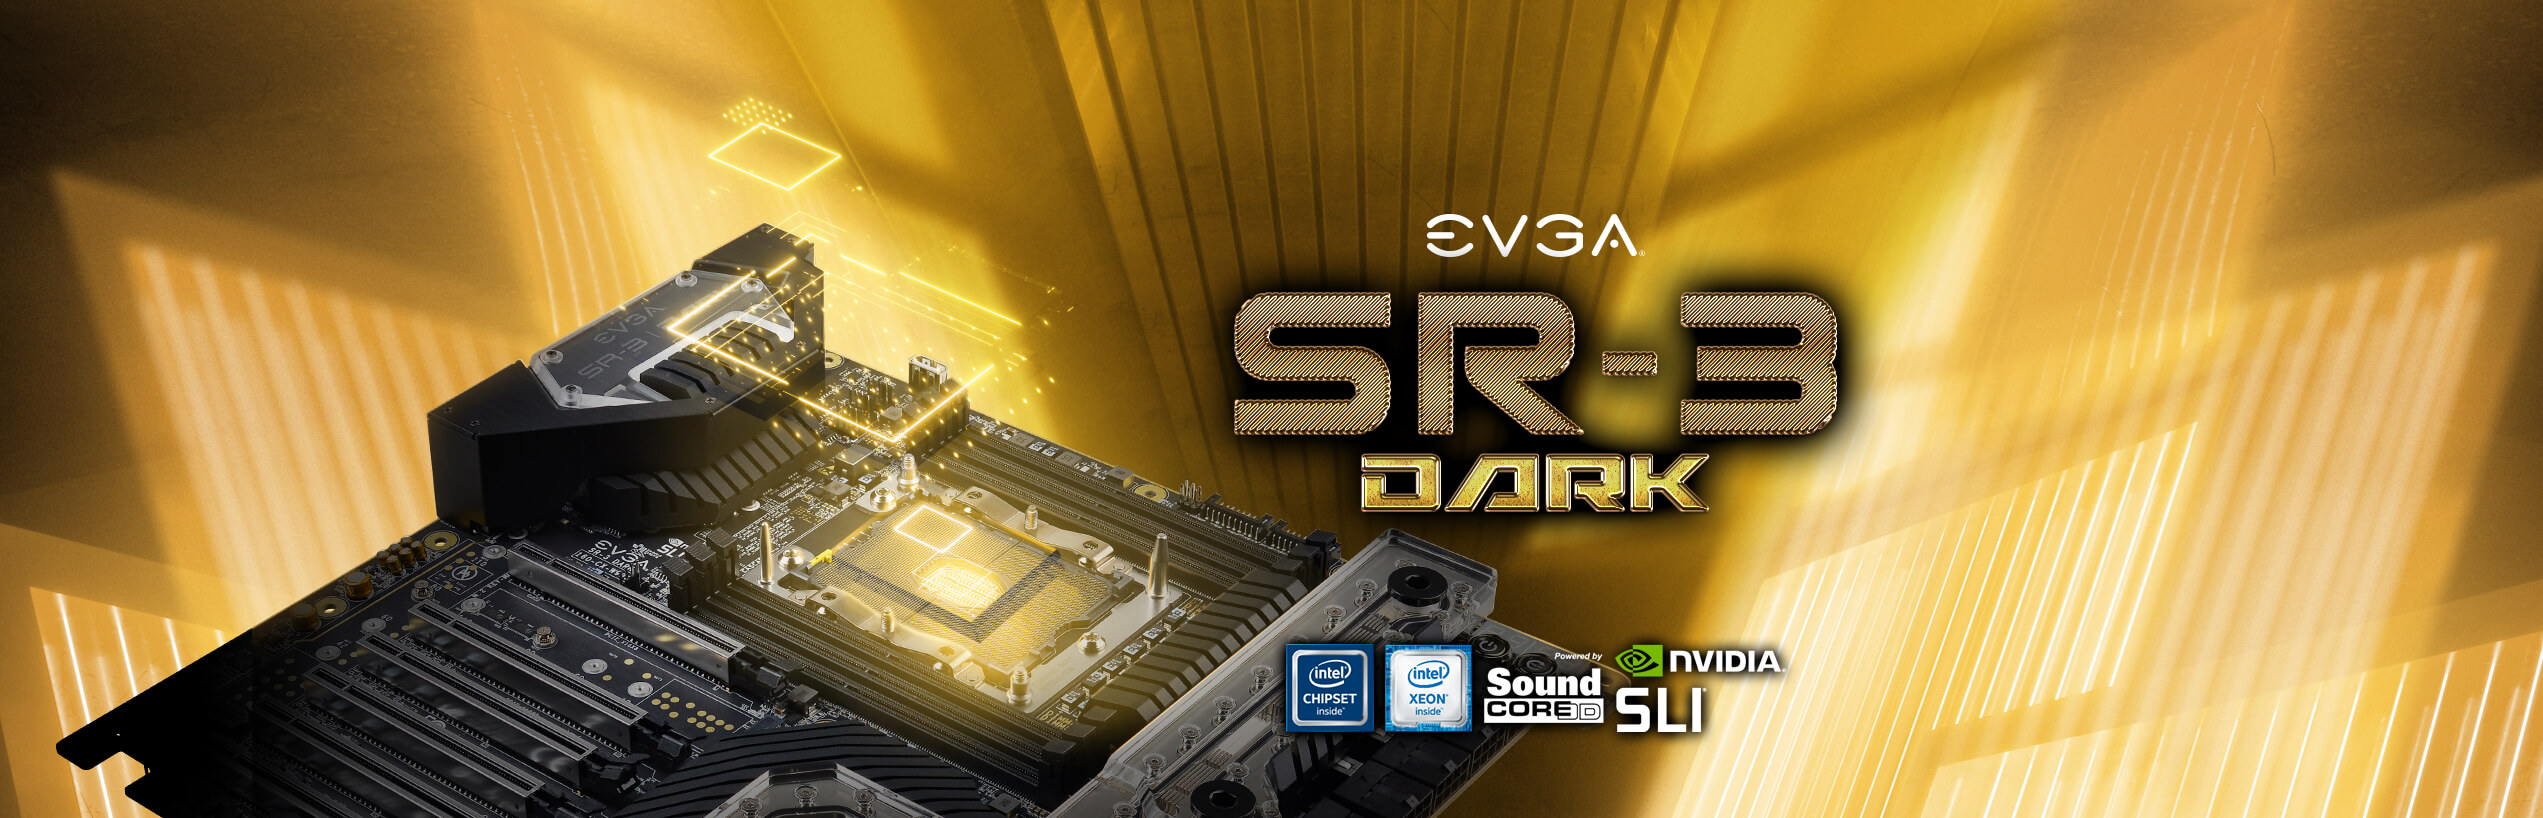 EVGA SR-3 Dark